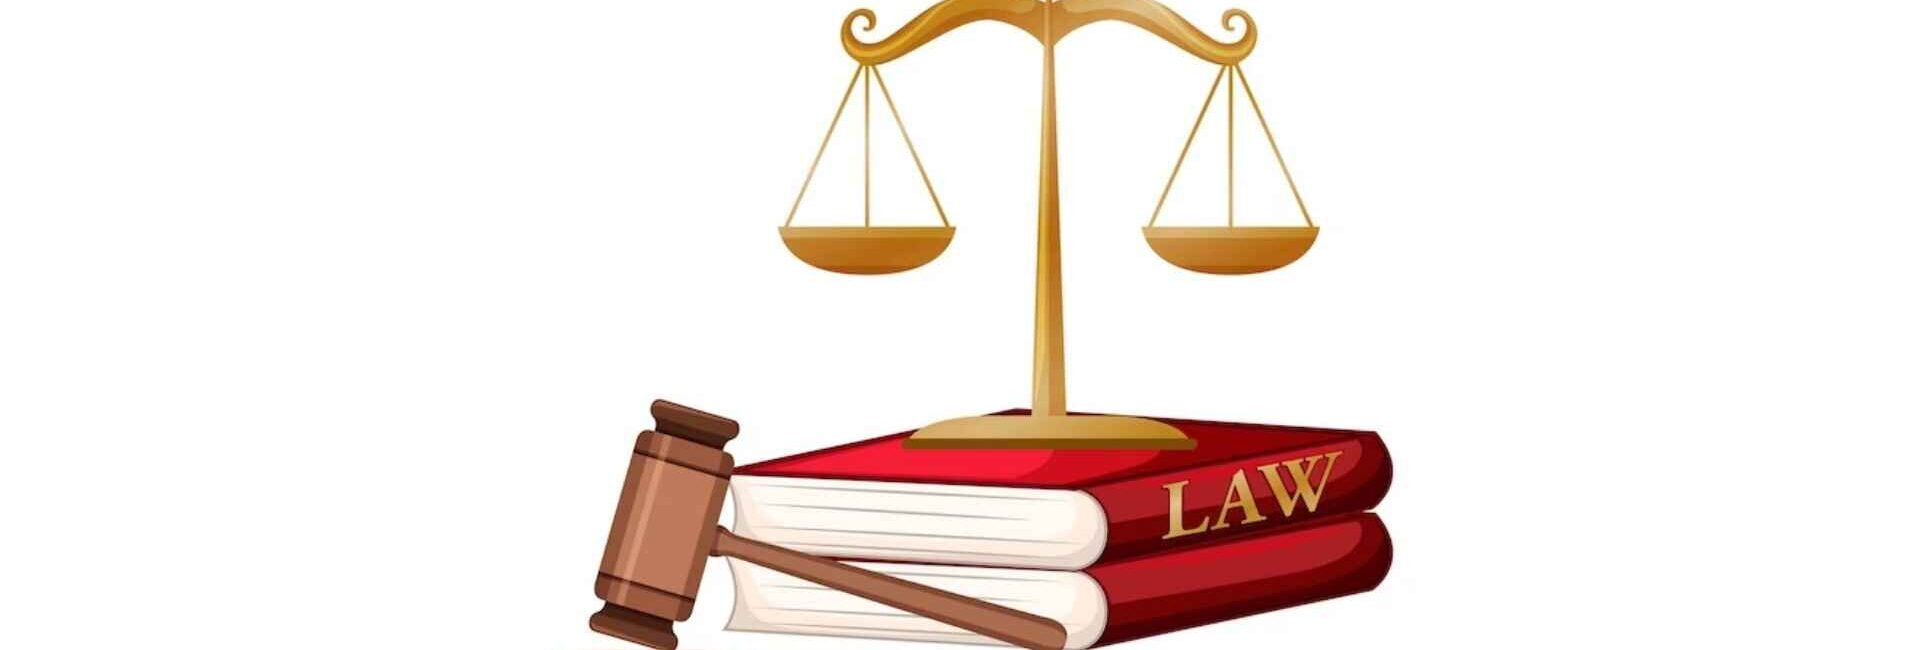 Lalji Advocates - Lawyers in Noida